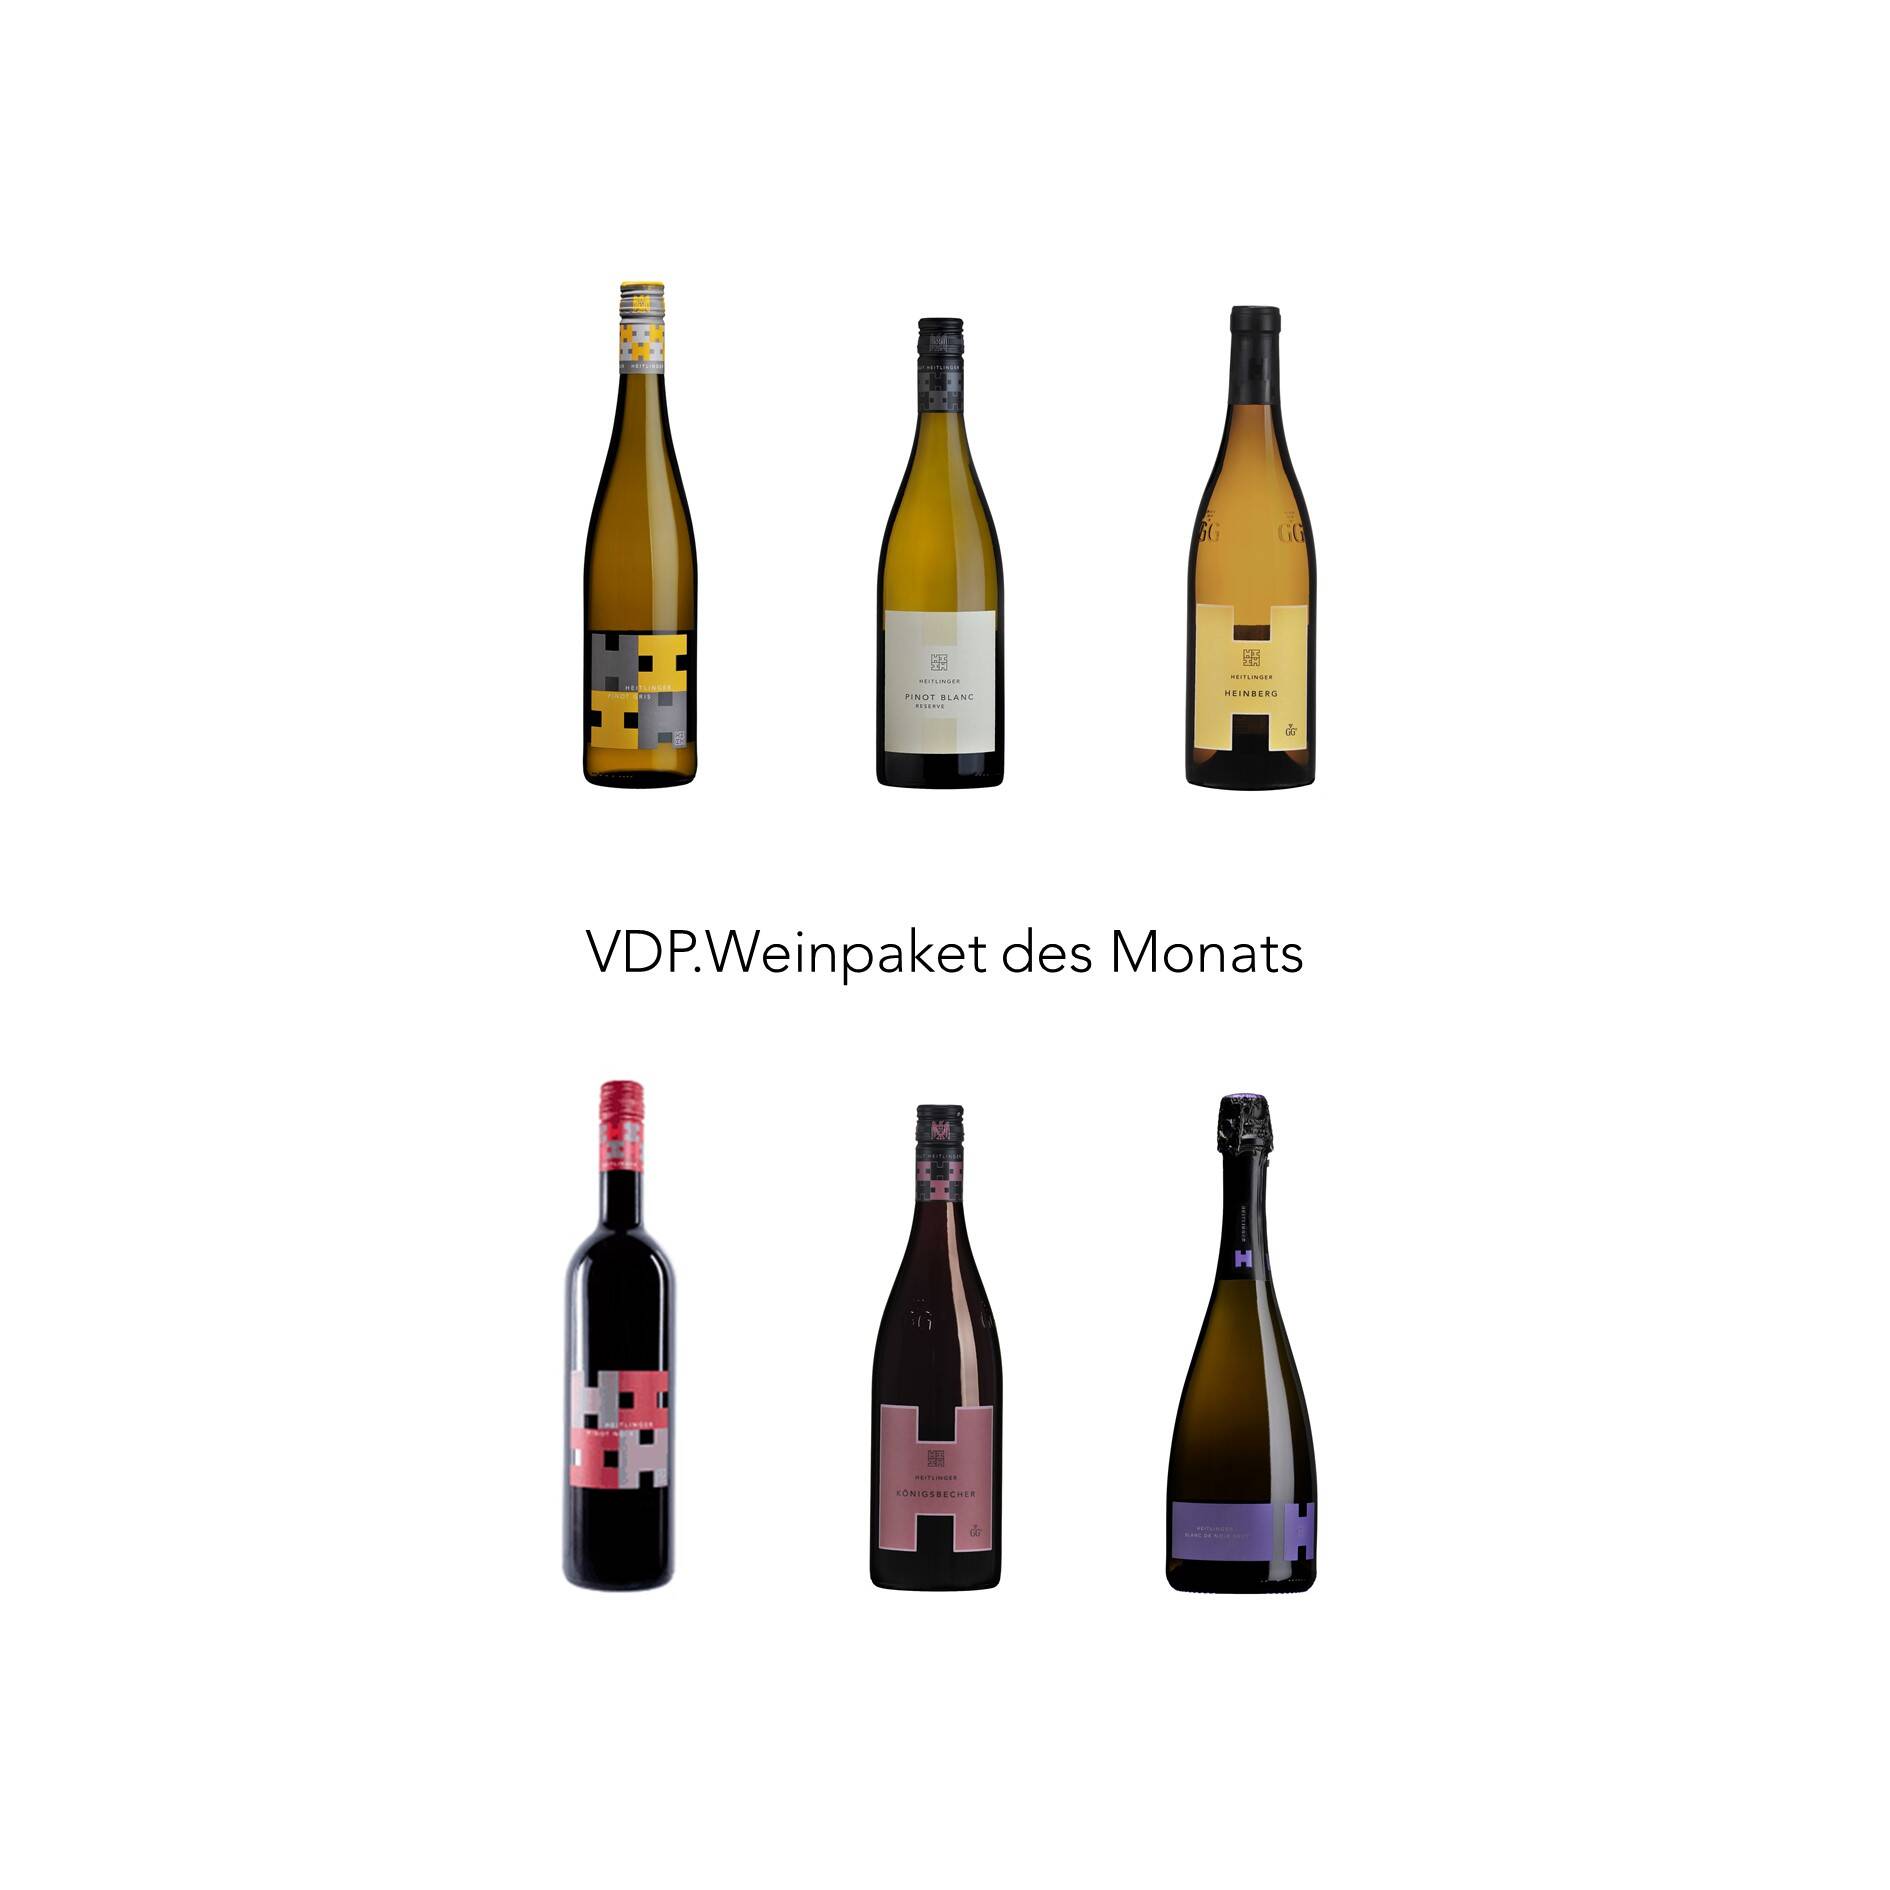 VDP.Weinpaket des Monats Juli